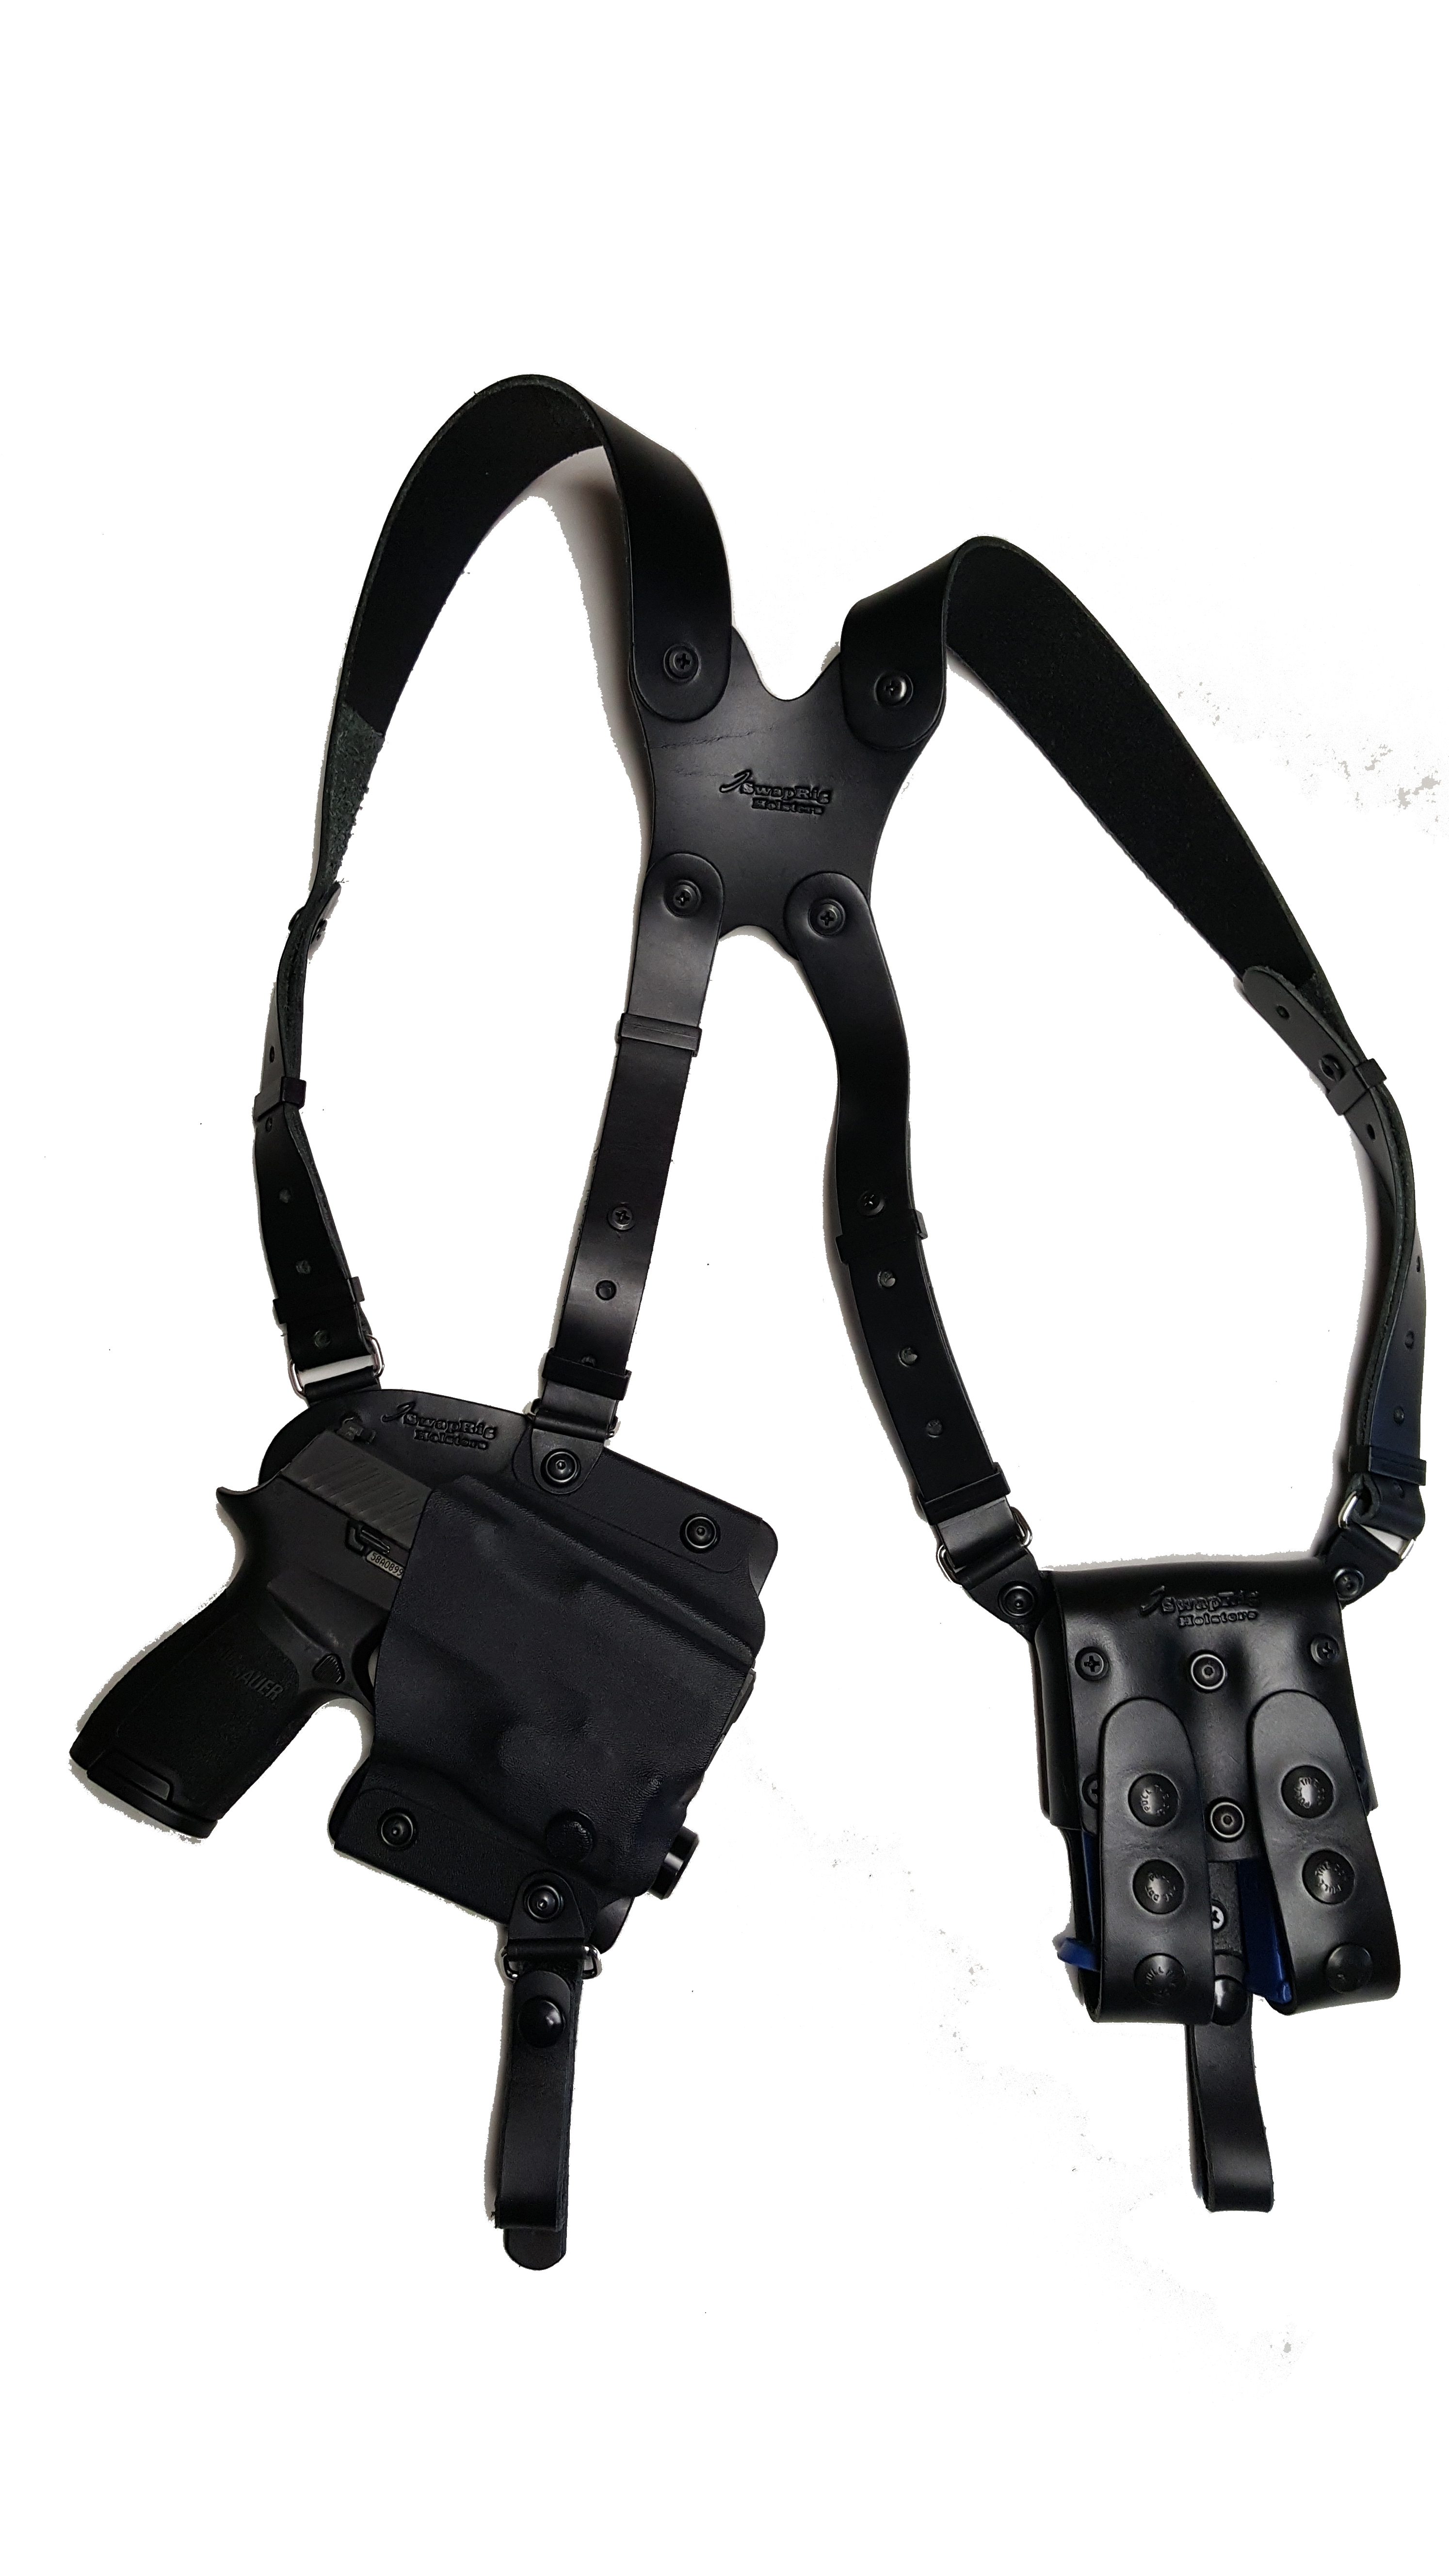 The Flanker Shoulder holster is designed to provide a fully